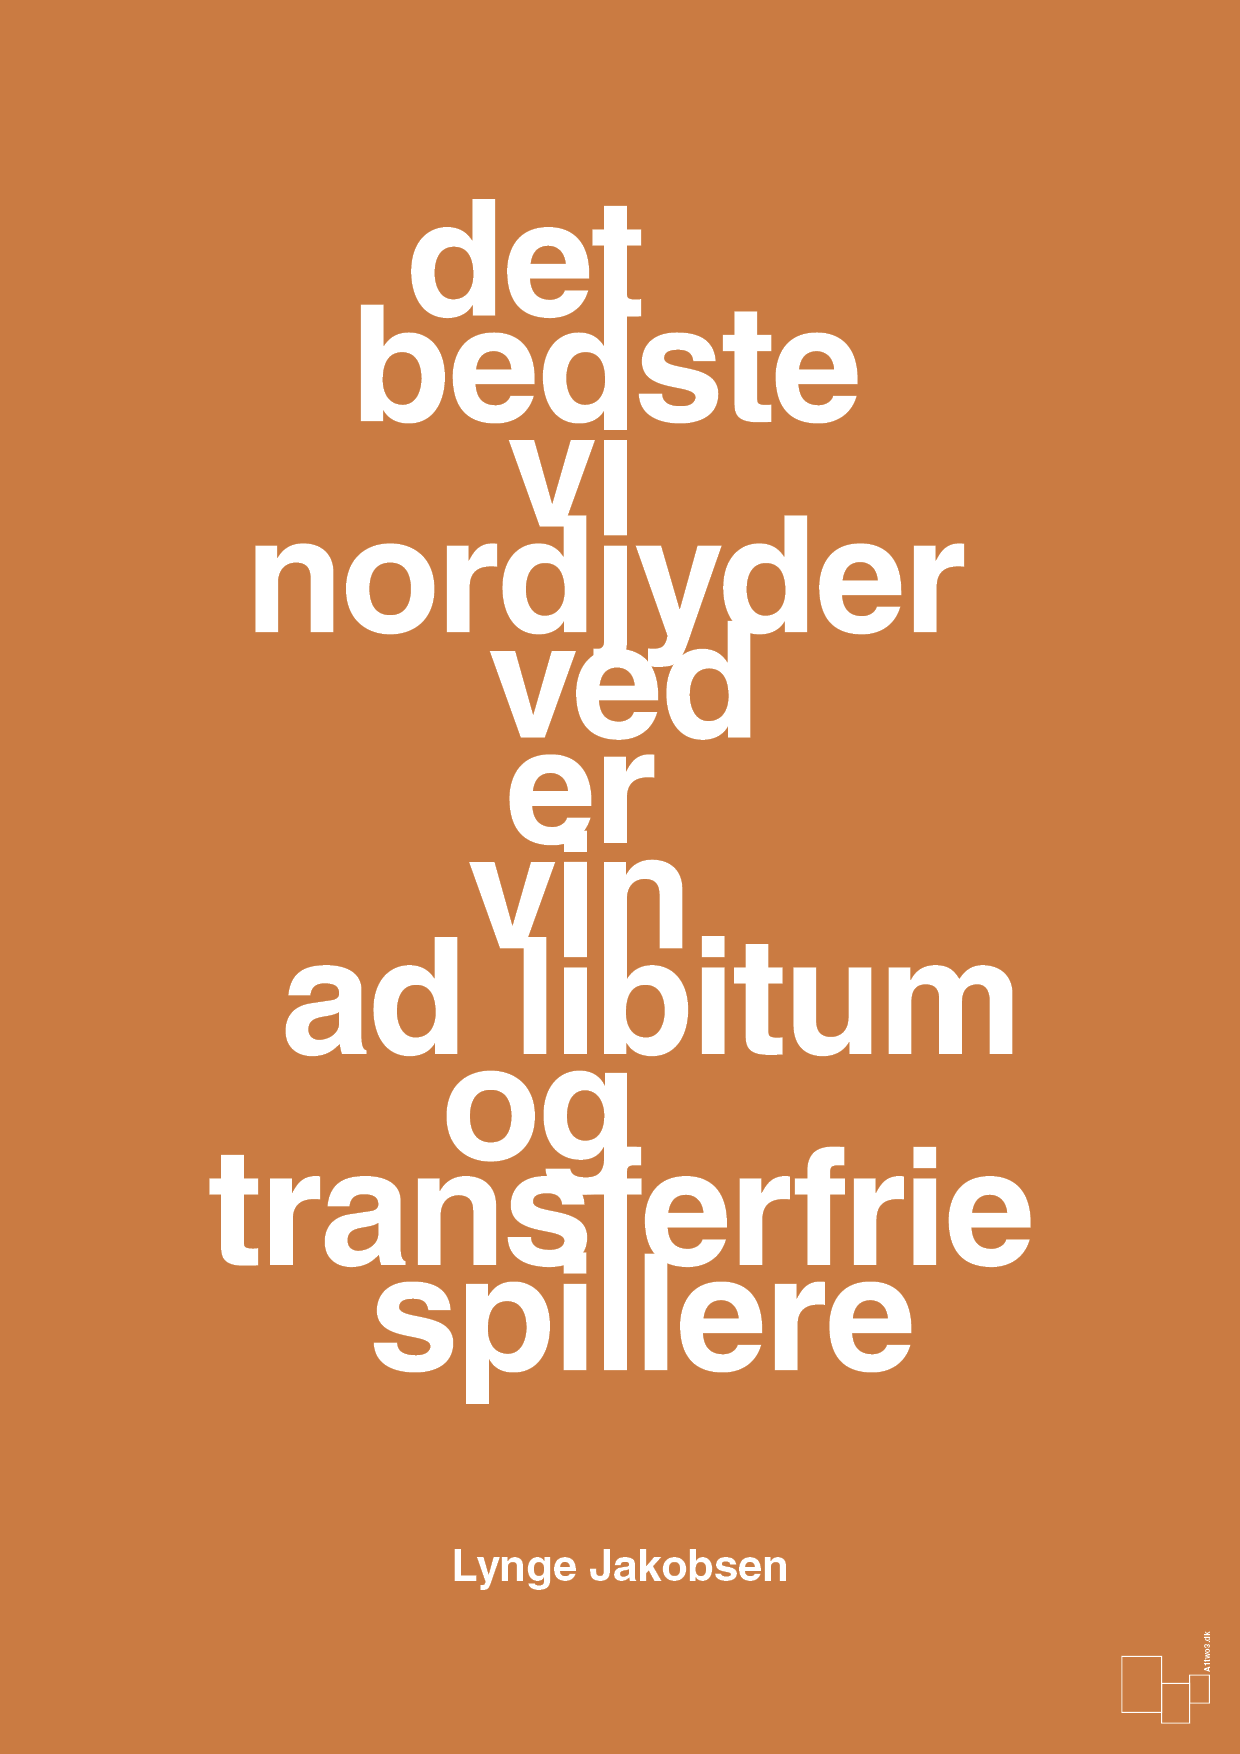 det bedste vi nordjyder ved er vin ad libitum og transferfrie spillere - Plakat med Citater i Rumba Orange